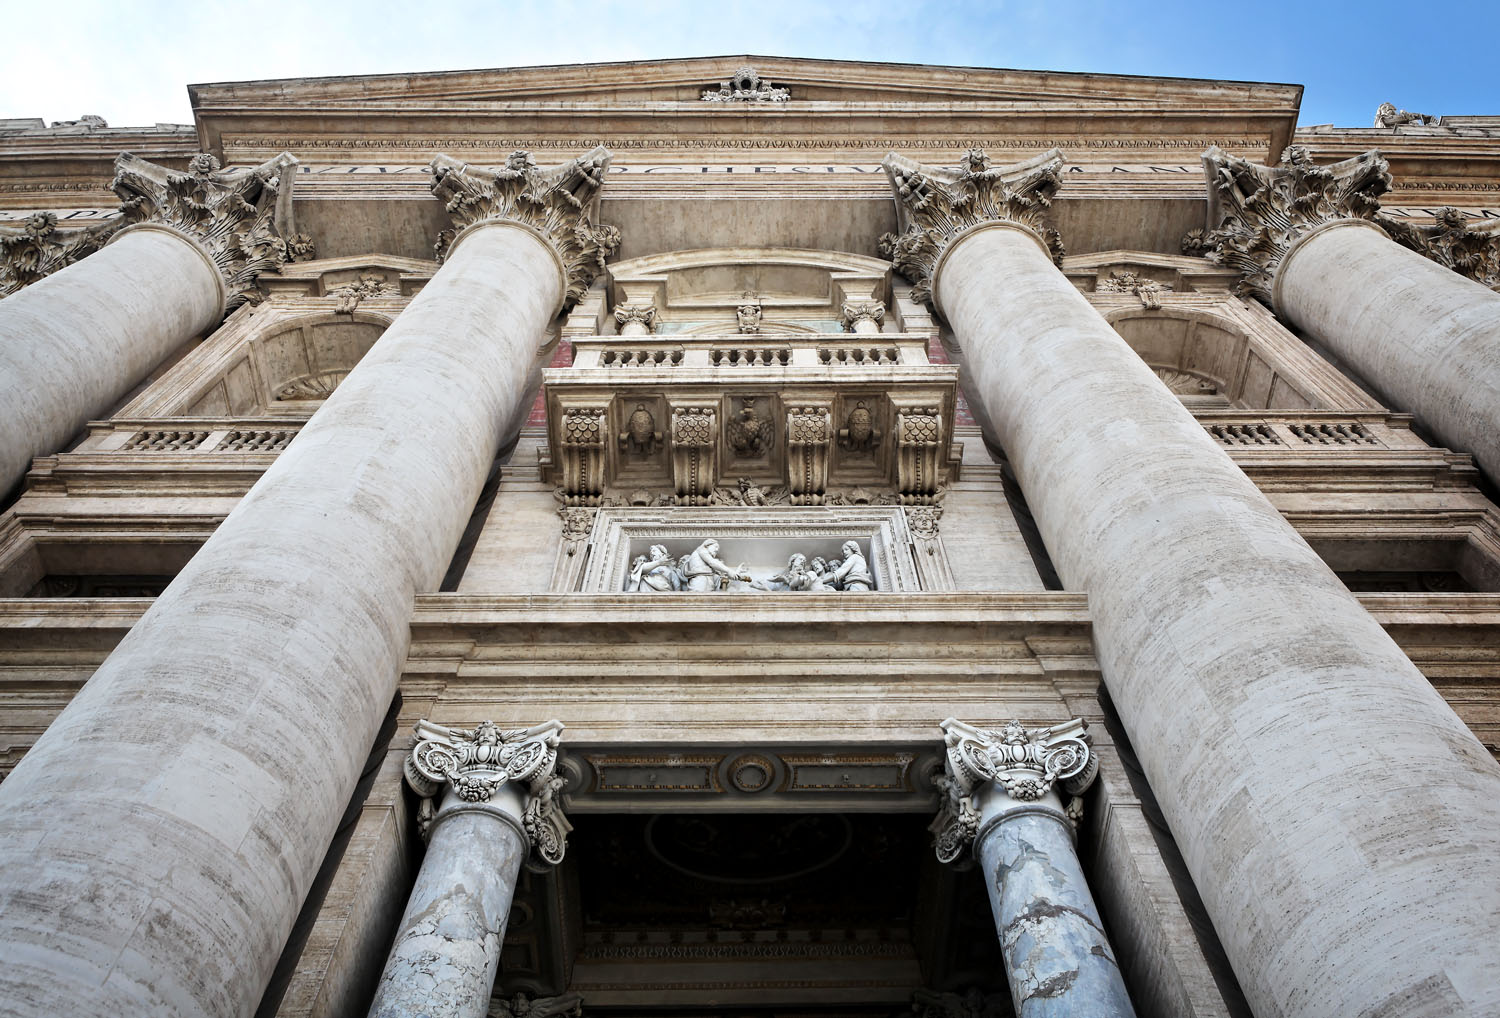 St. Peter's Basilica, Rome